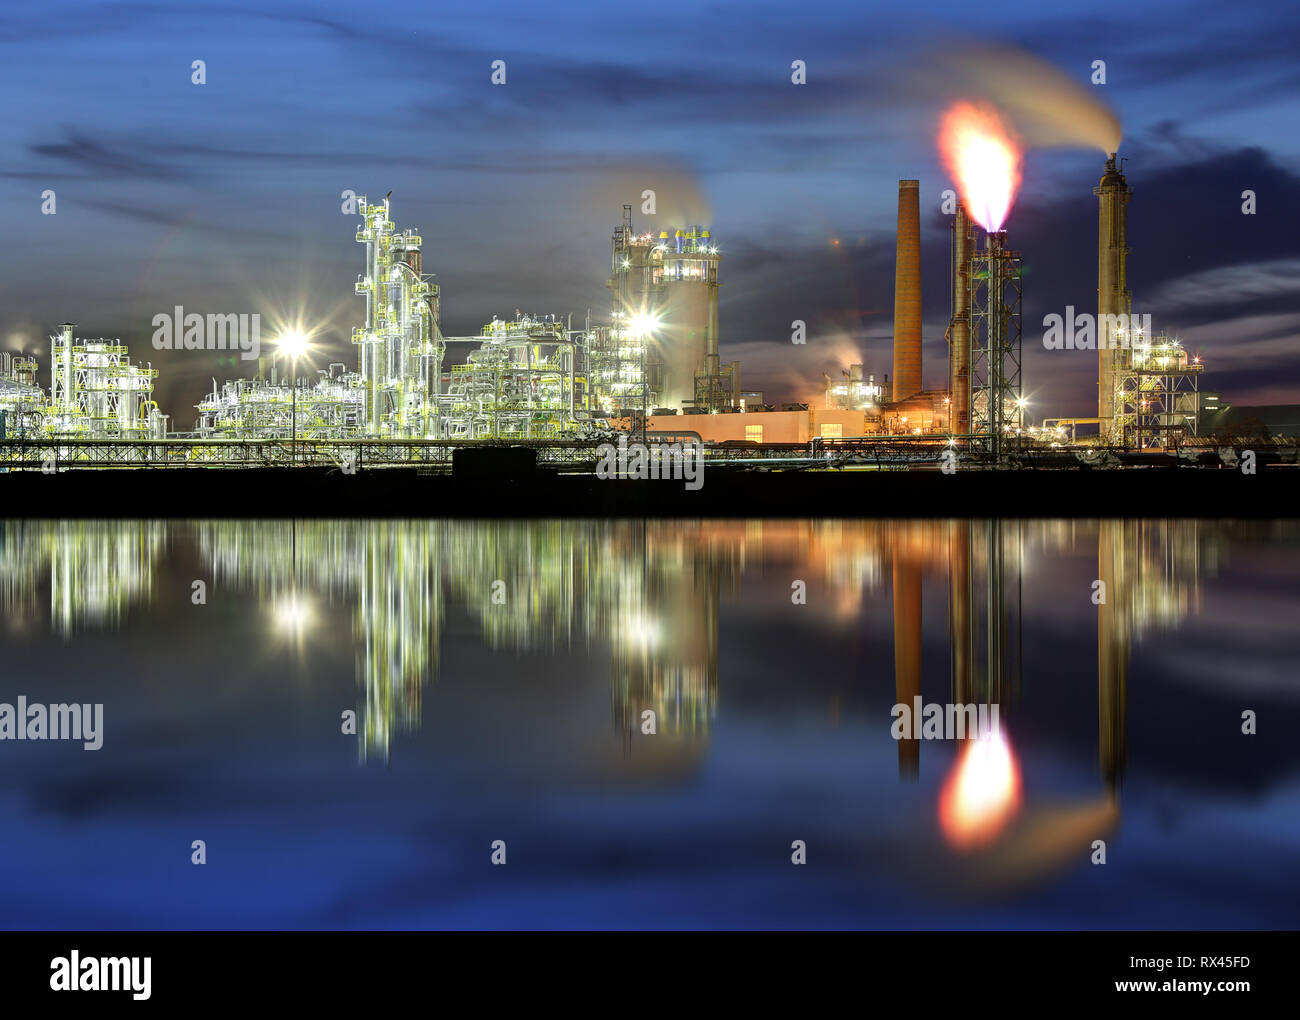 Ölraffinerie - Petrochemische Industrie Fabrik Stockfoto